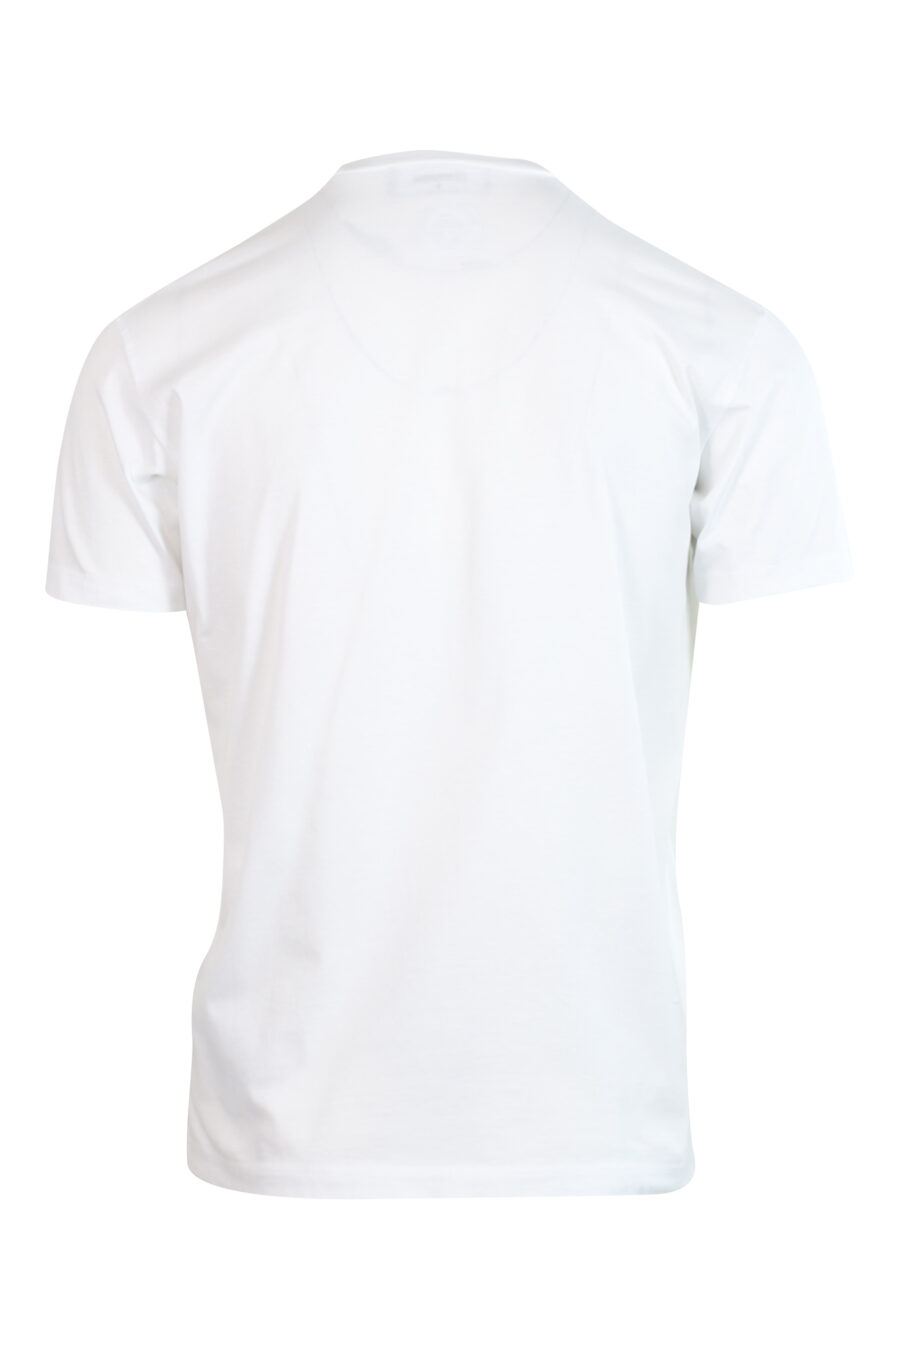 T-shirt blanc avec maxilogo "icon pixeled" turquoise et fuchsia - 8052134981191 2